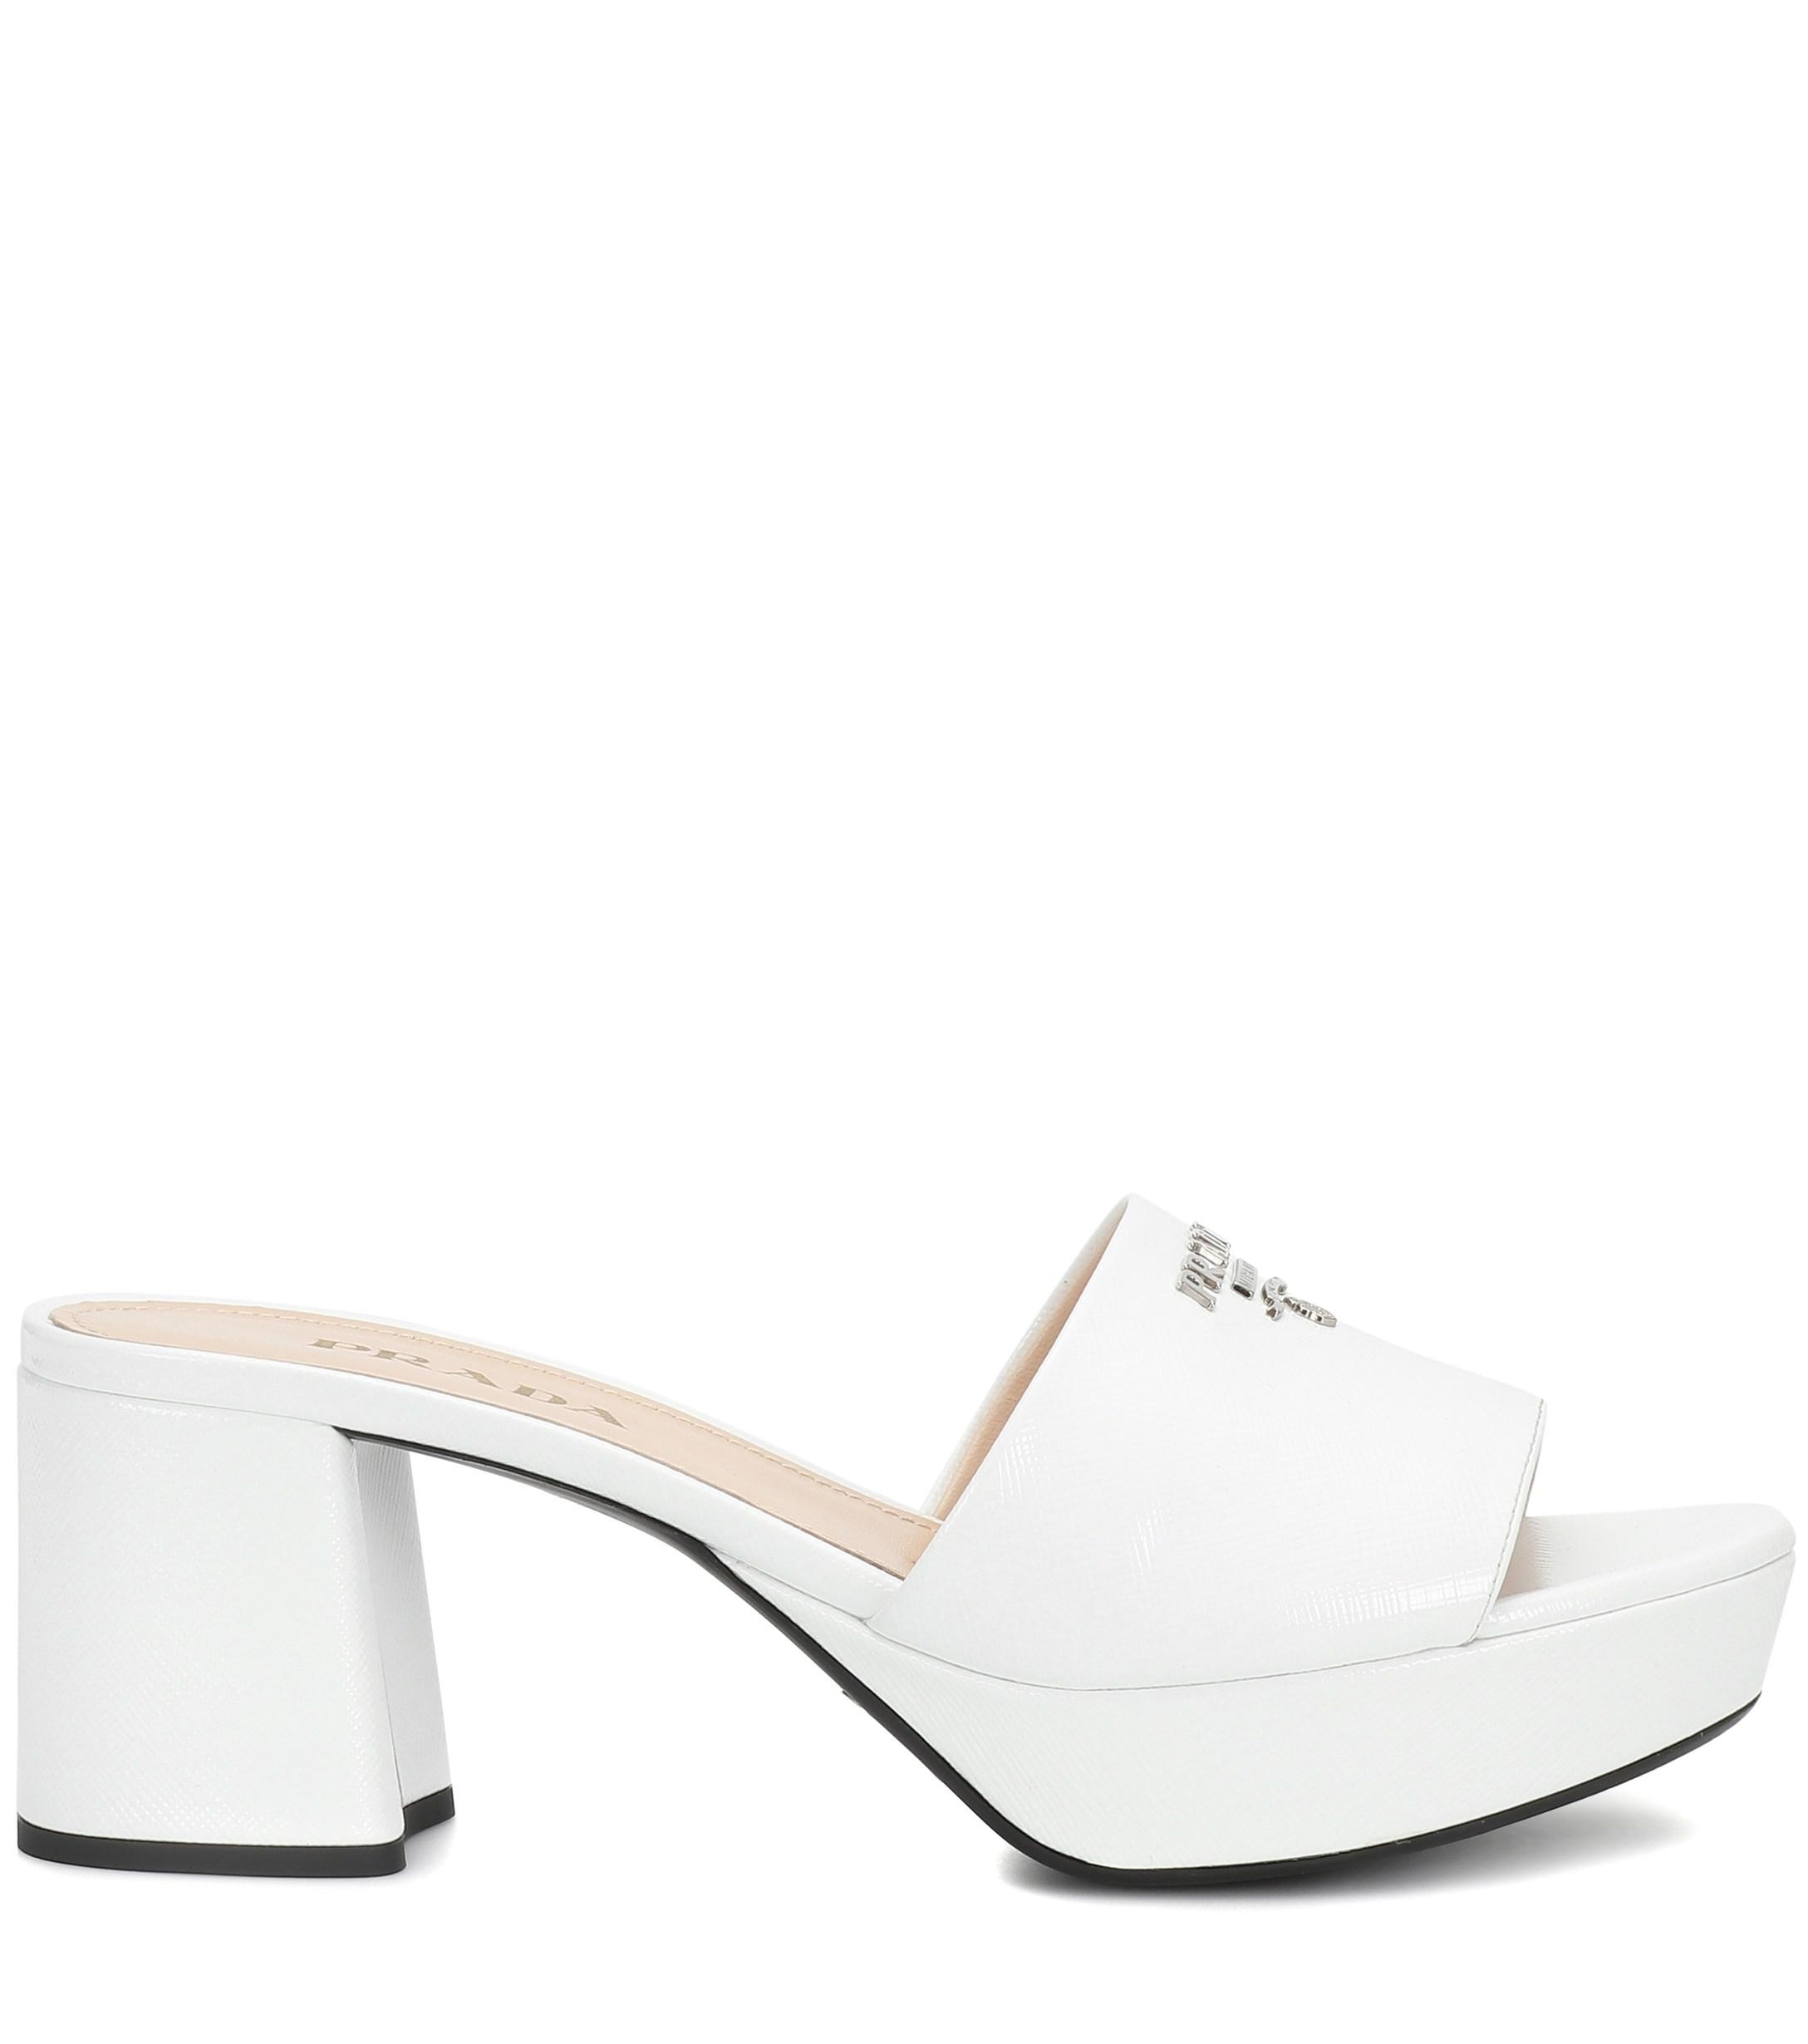 Prada Plateau Leather Sandals in White - Lyst